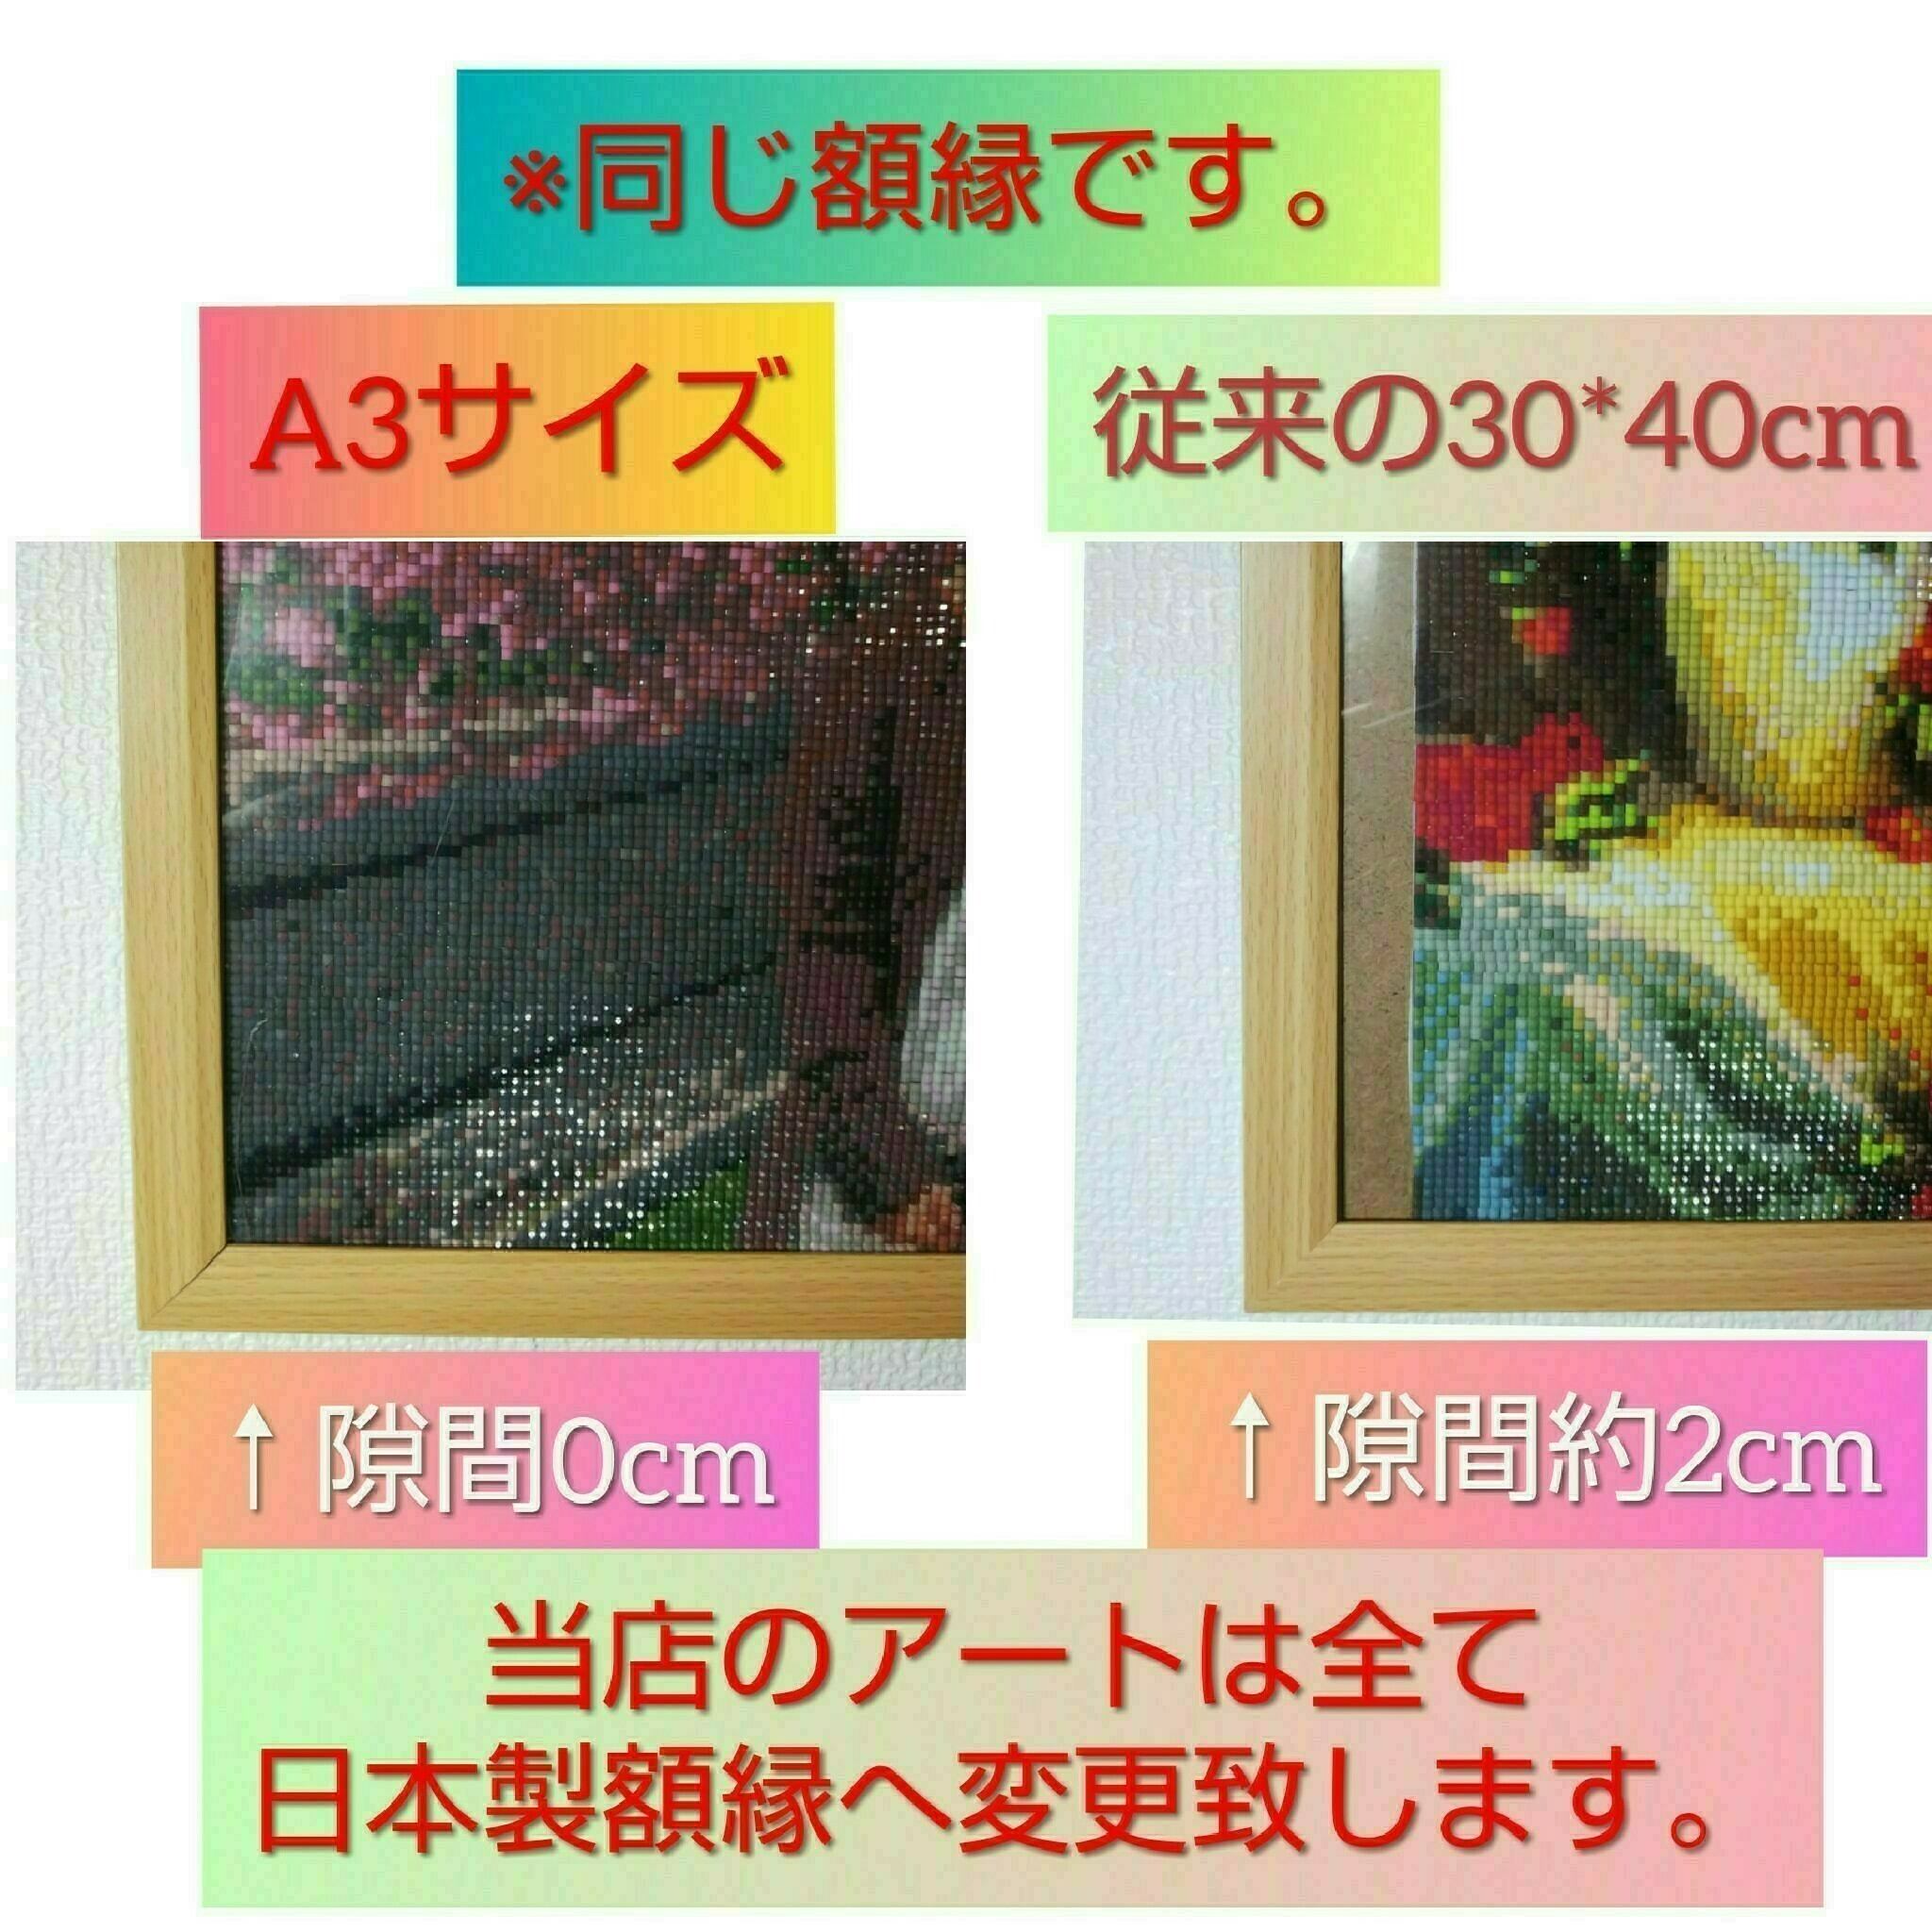 A3サイズ 四角ビーズ【runa-473】ダイヤモンドアート